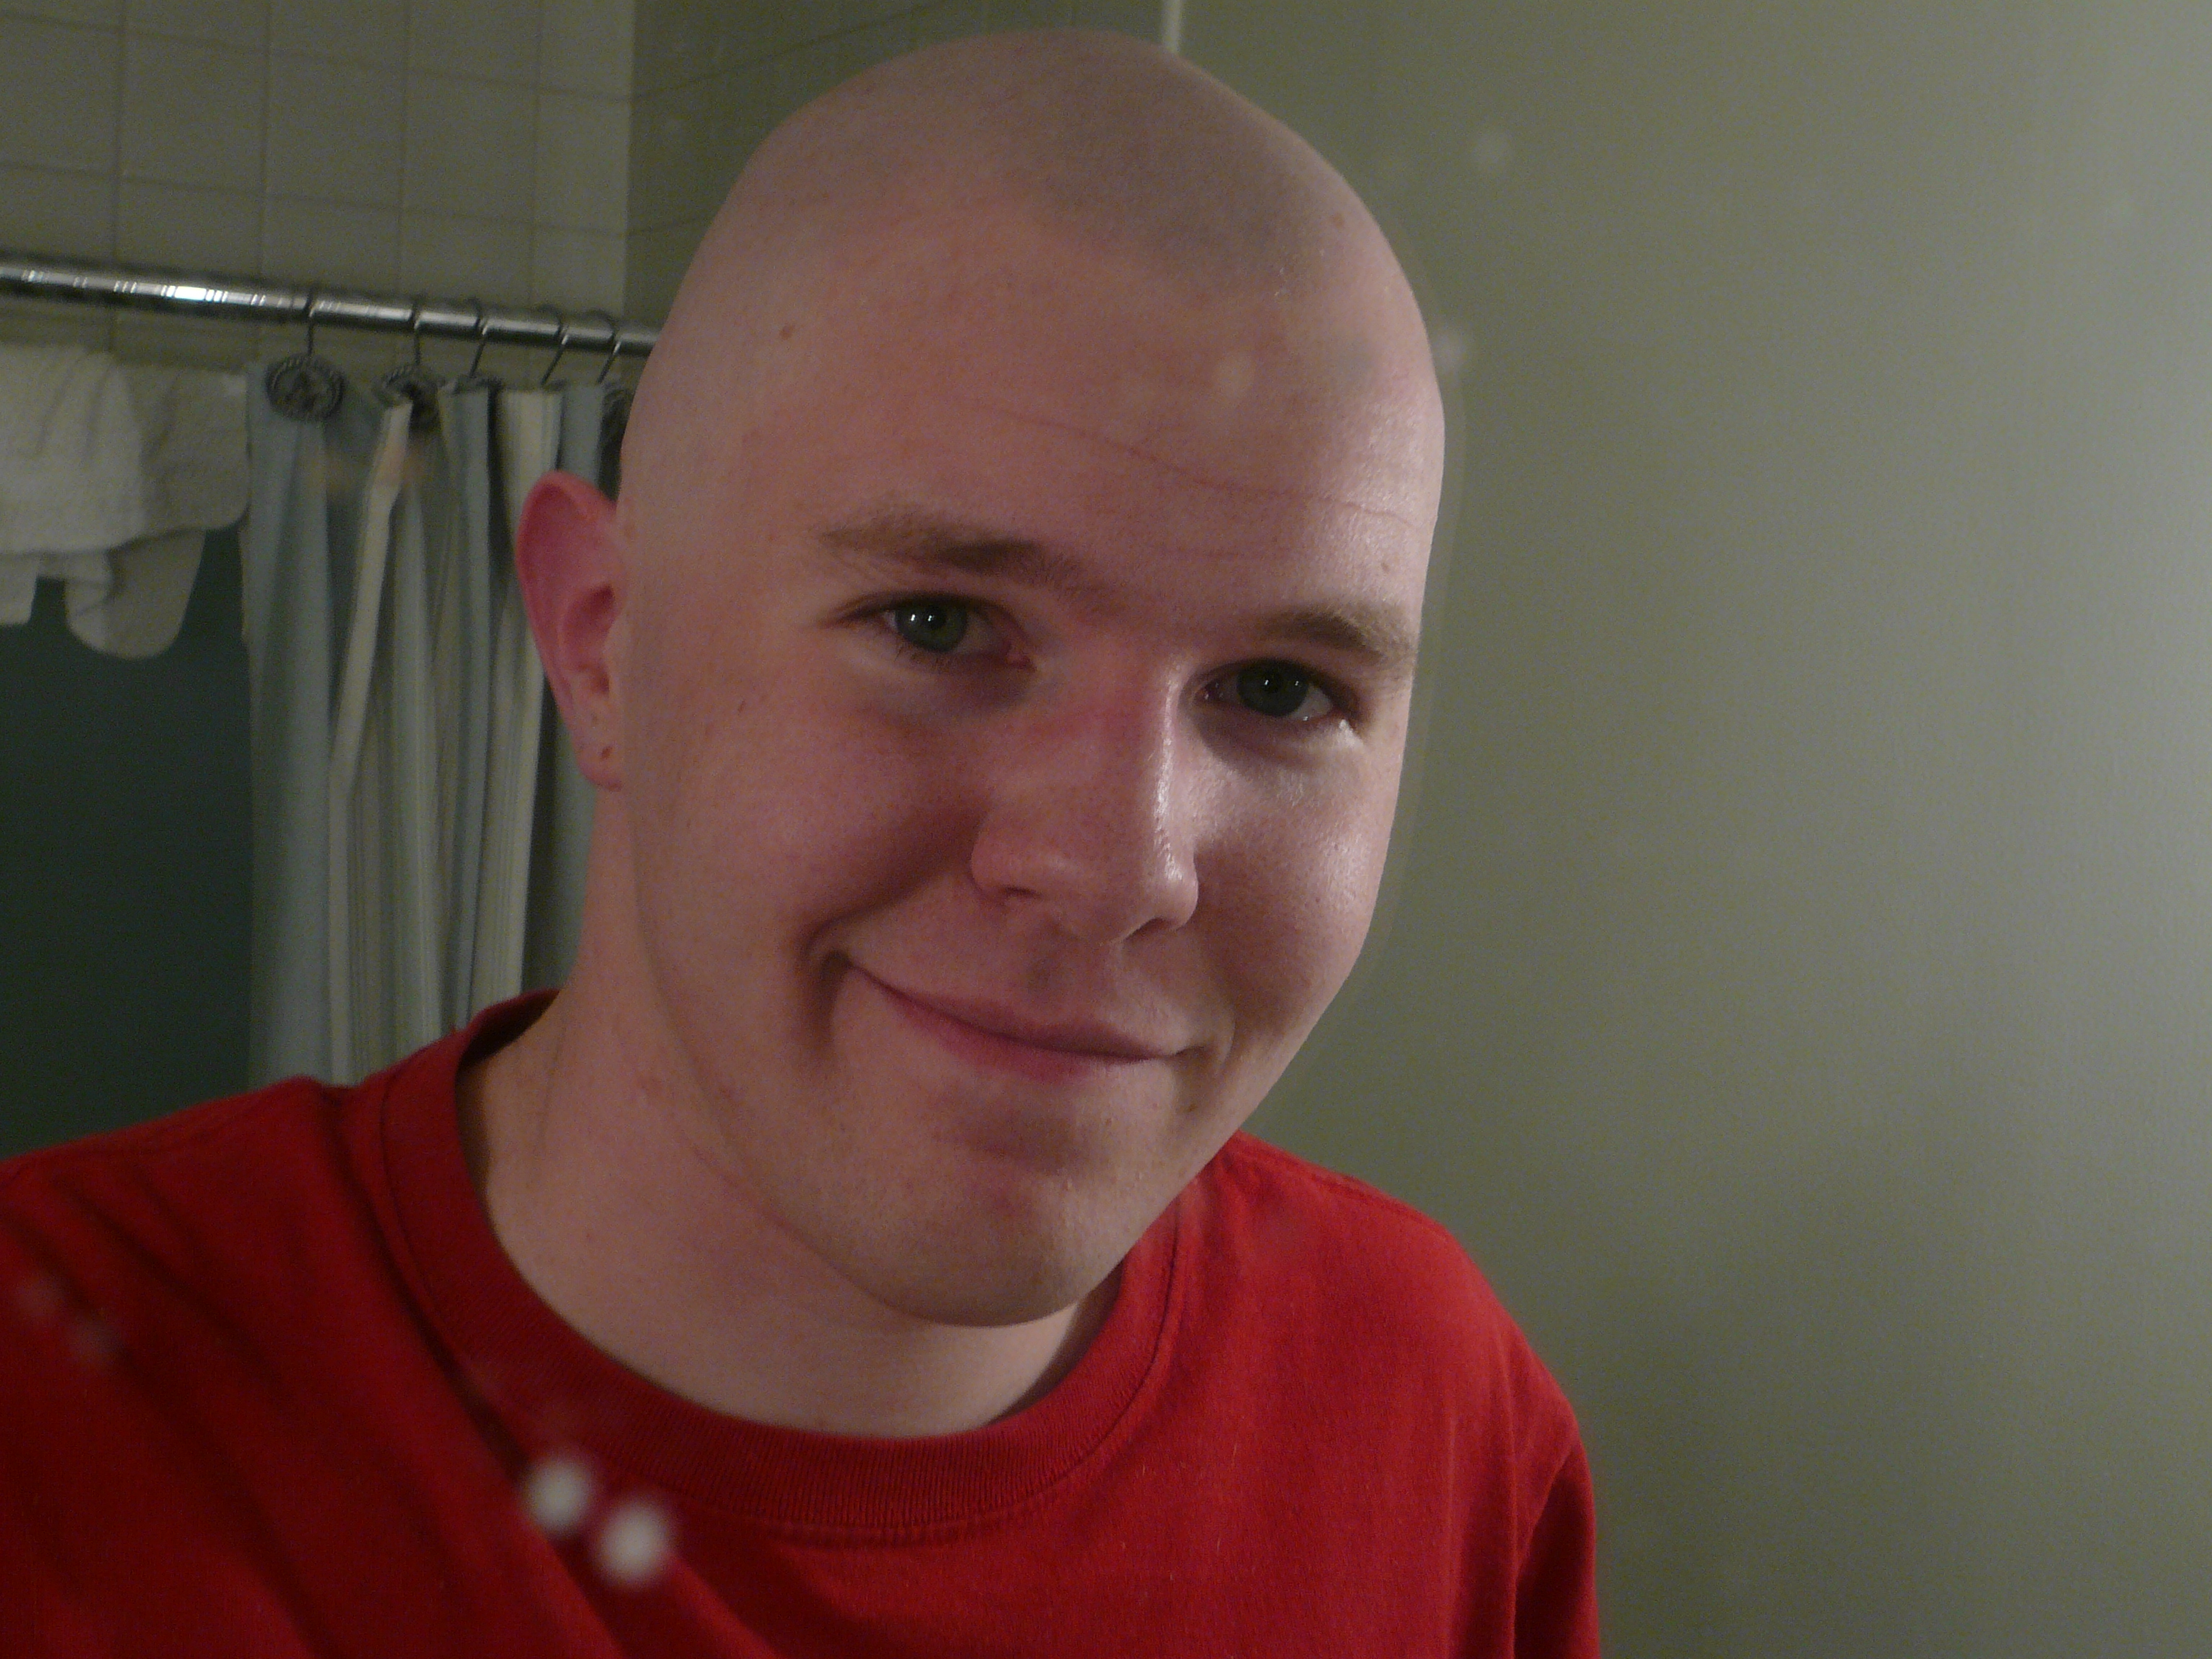 Bald Head Shaved 4